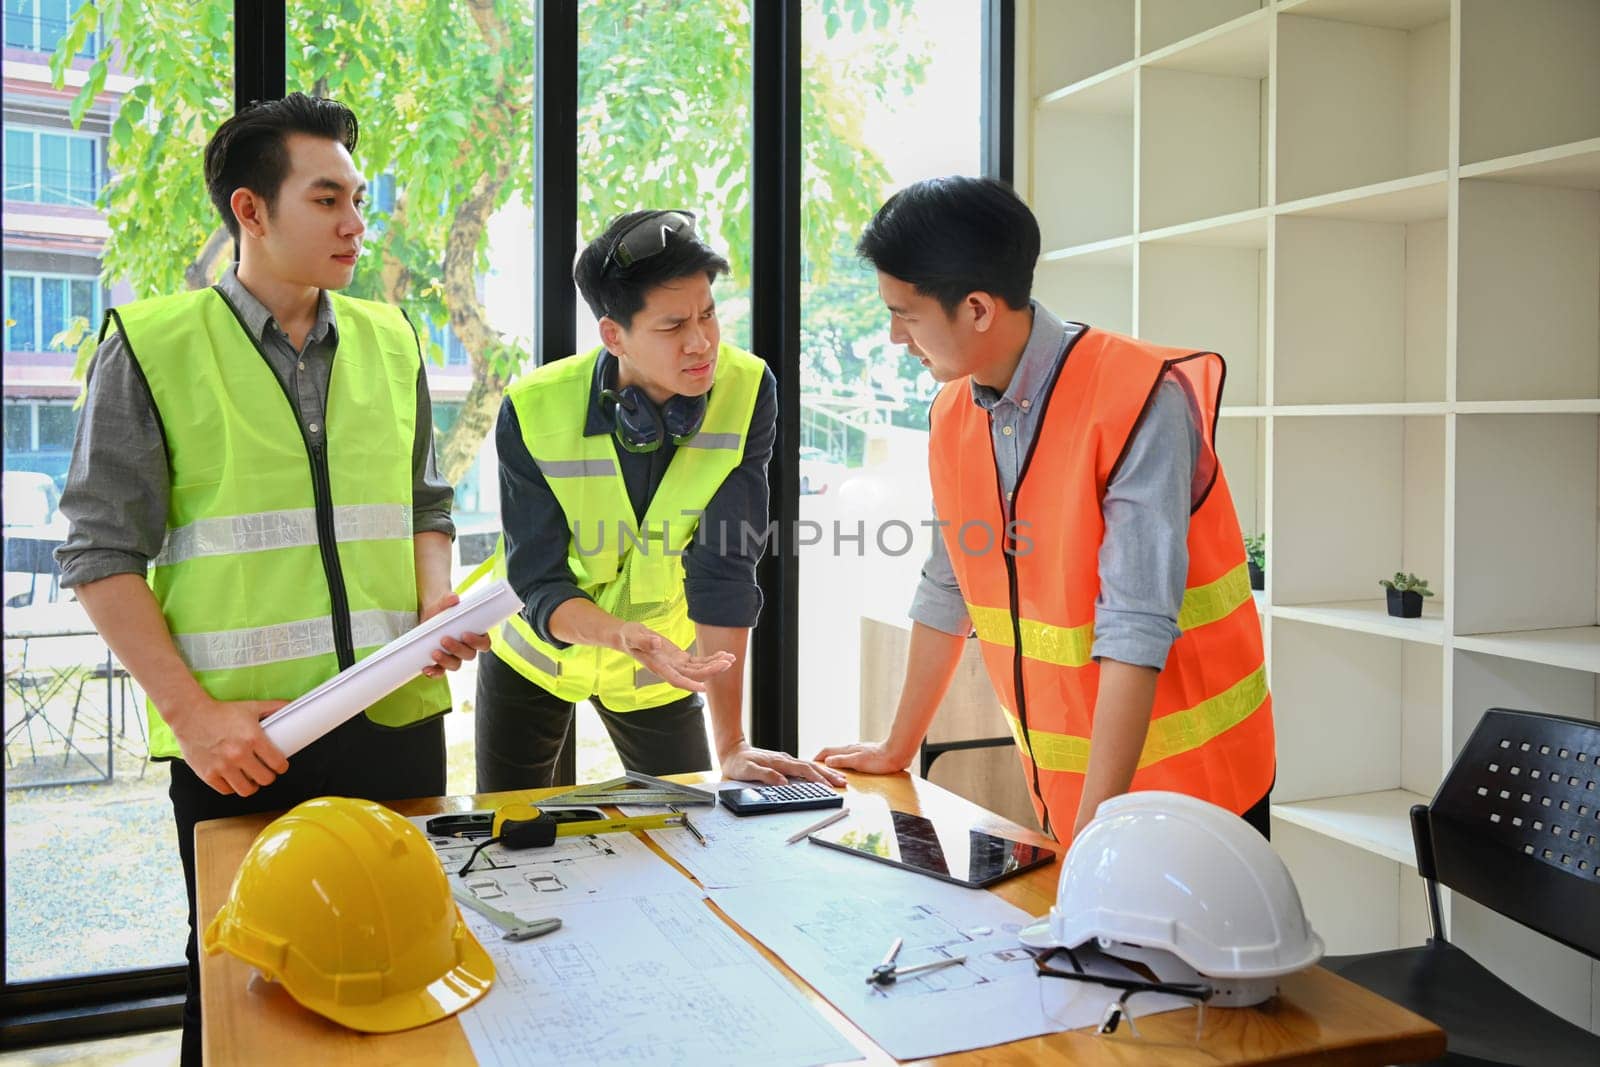 Architect team brainstorming, planning development details at construction office.